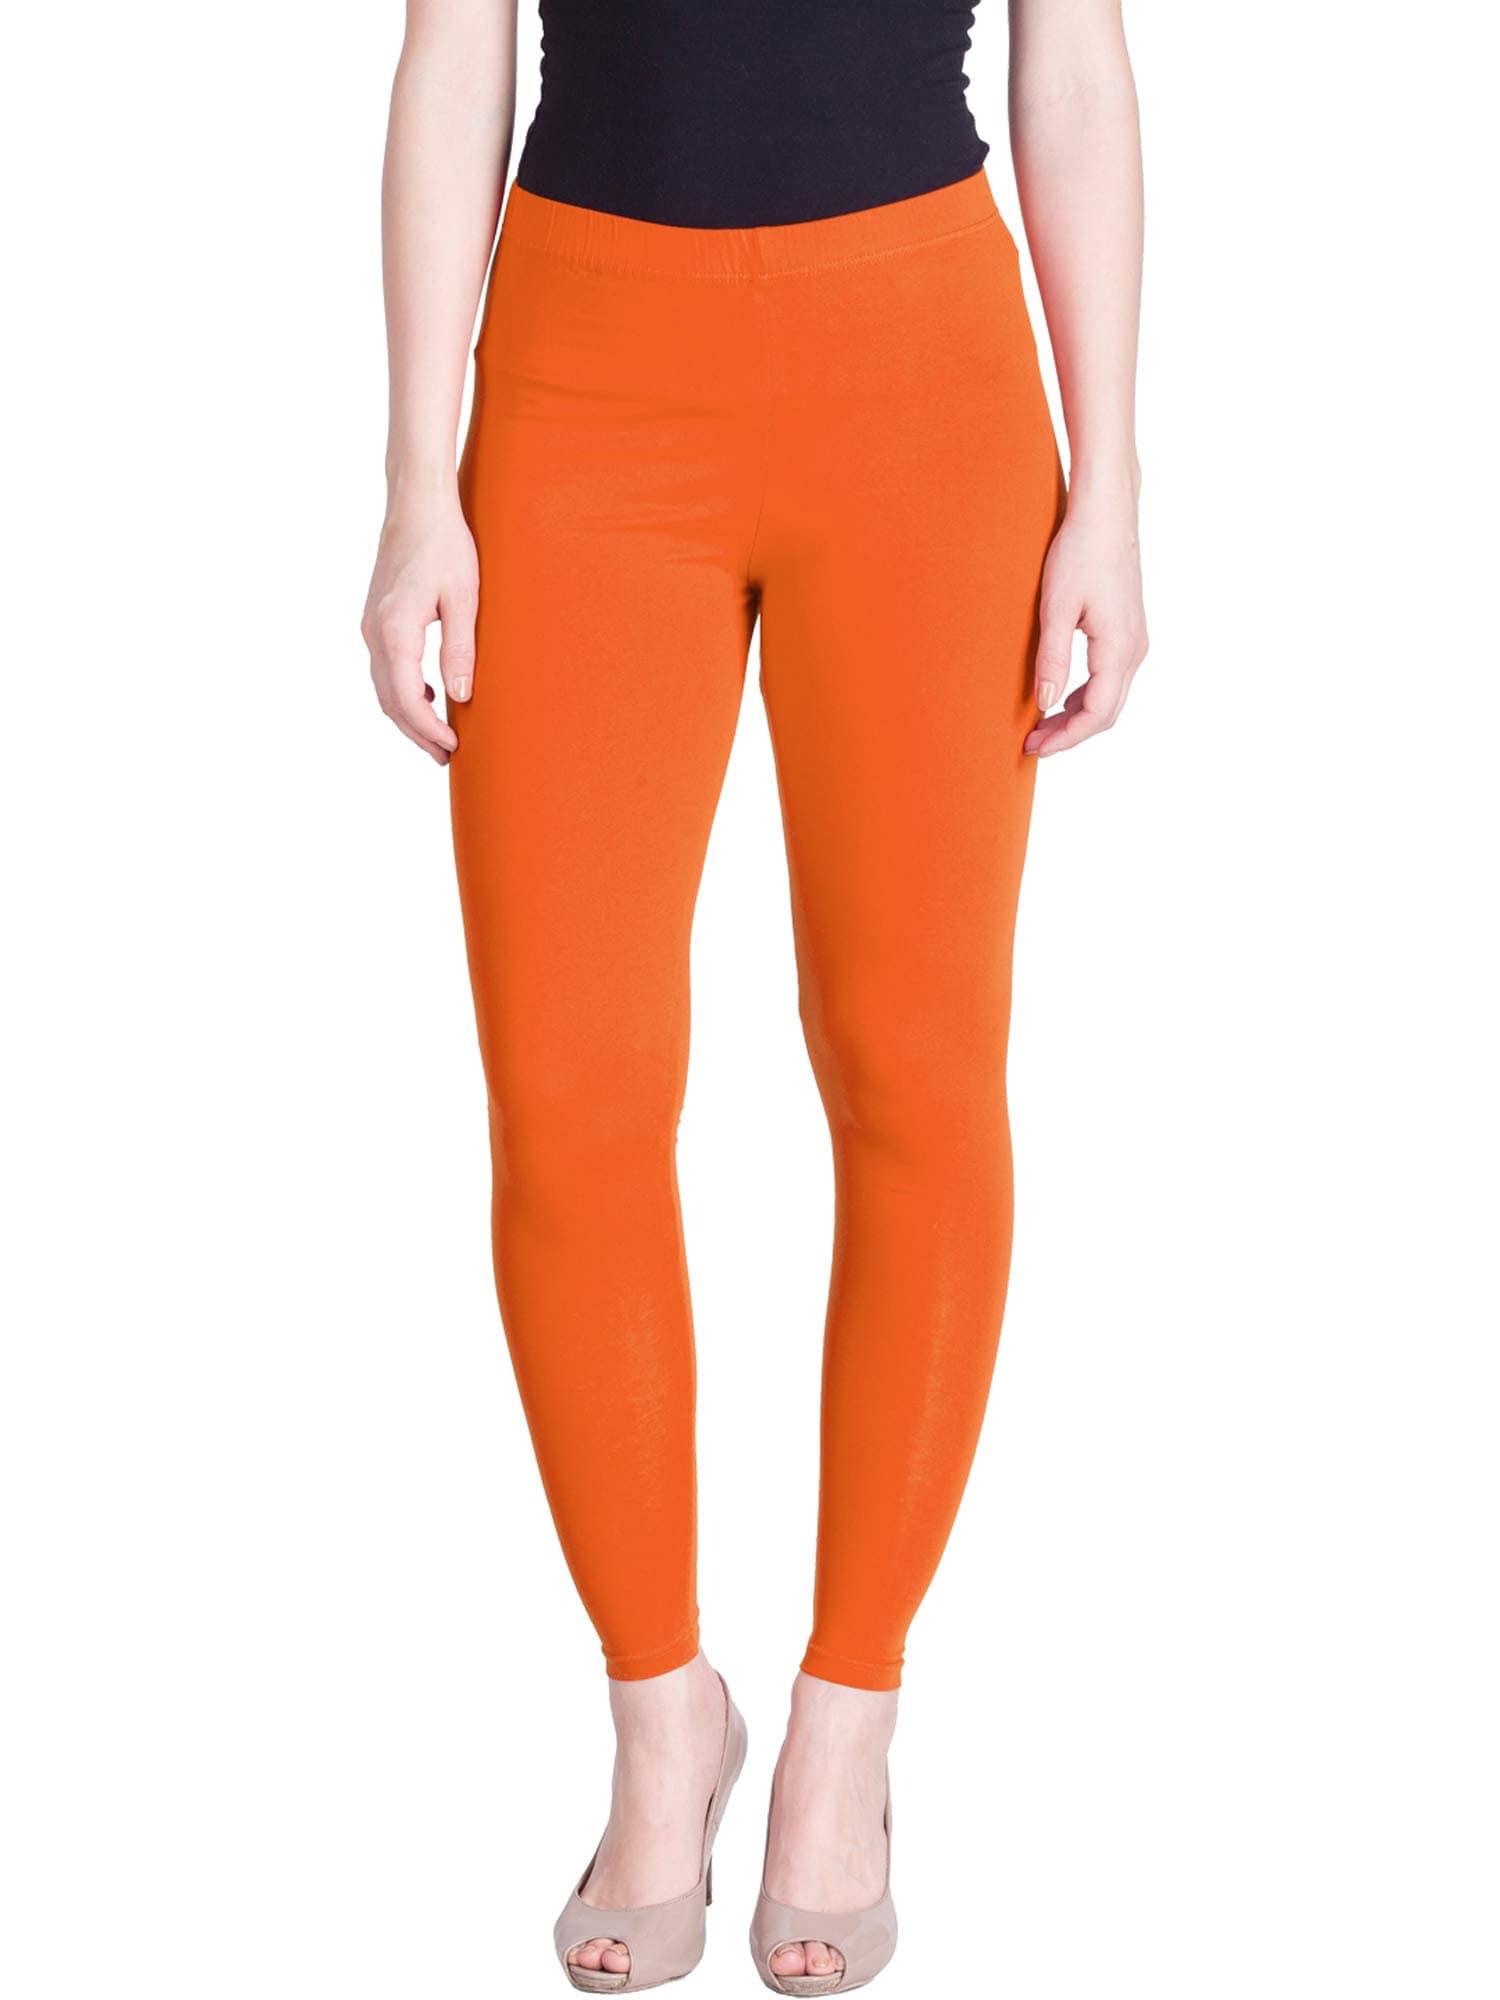 Women Ankle Length Leggings Colors Orange Free Size Free Shipping 